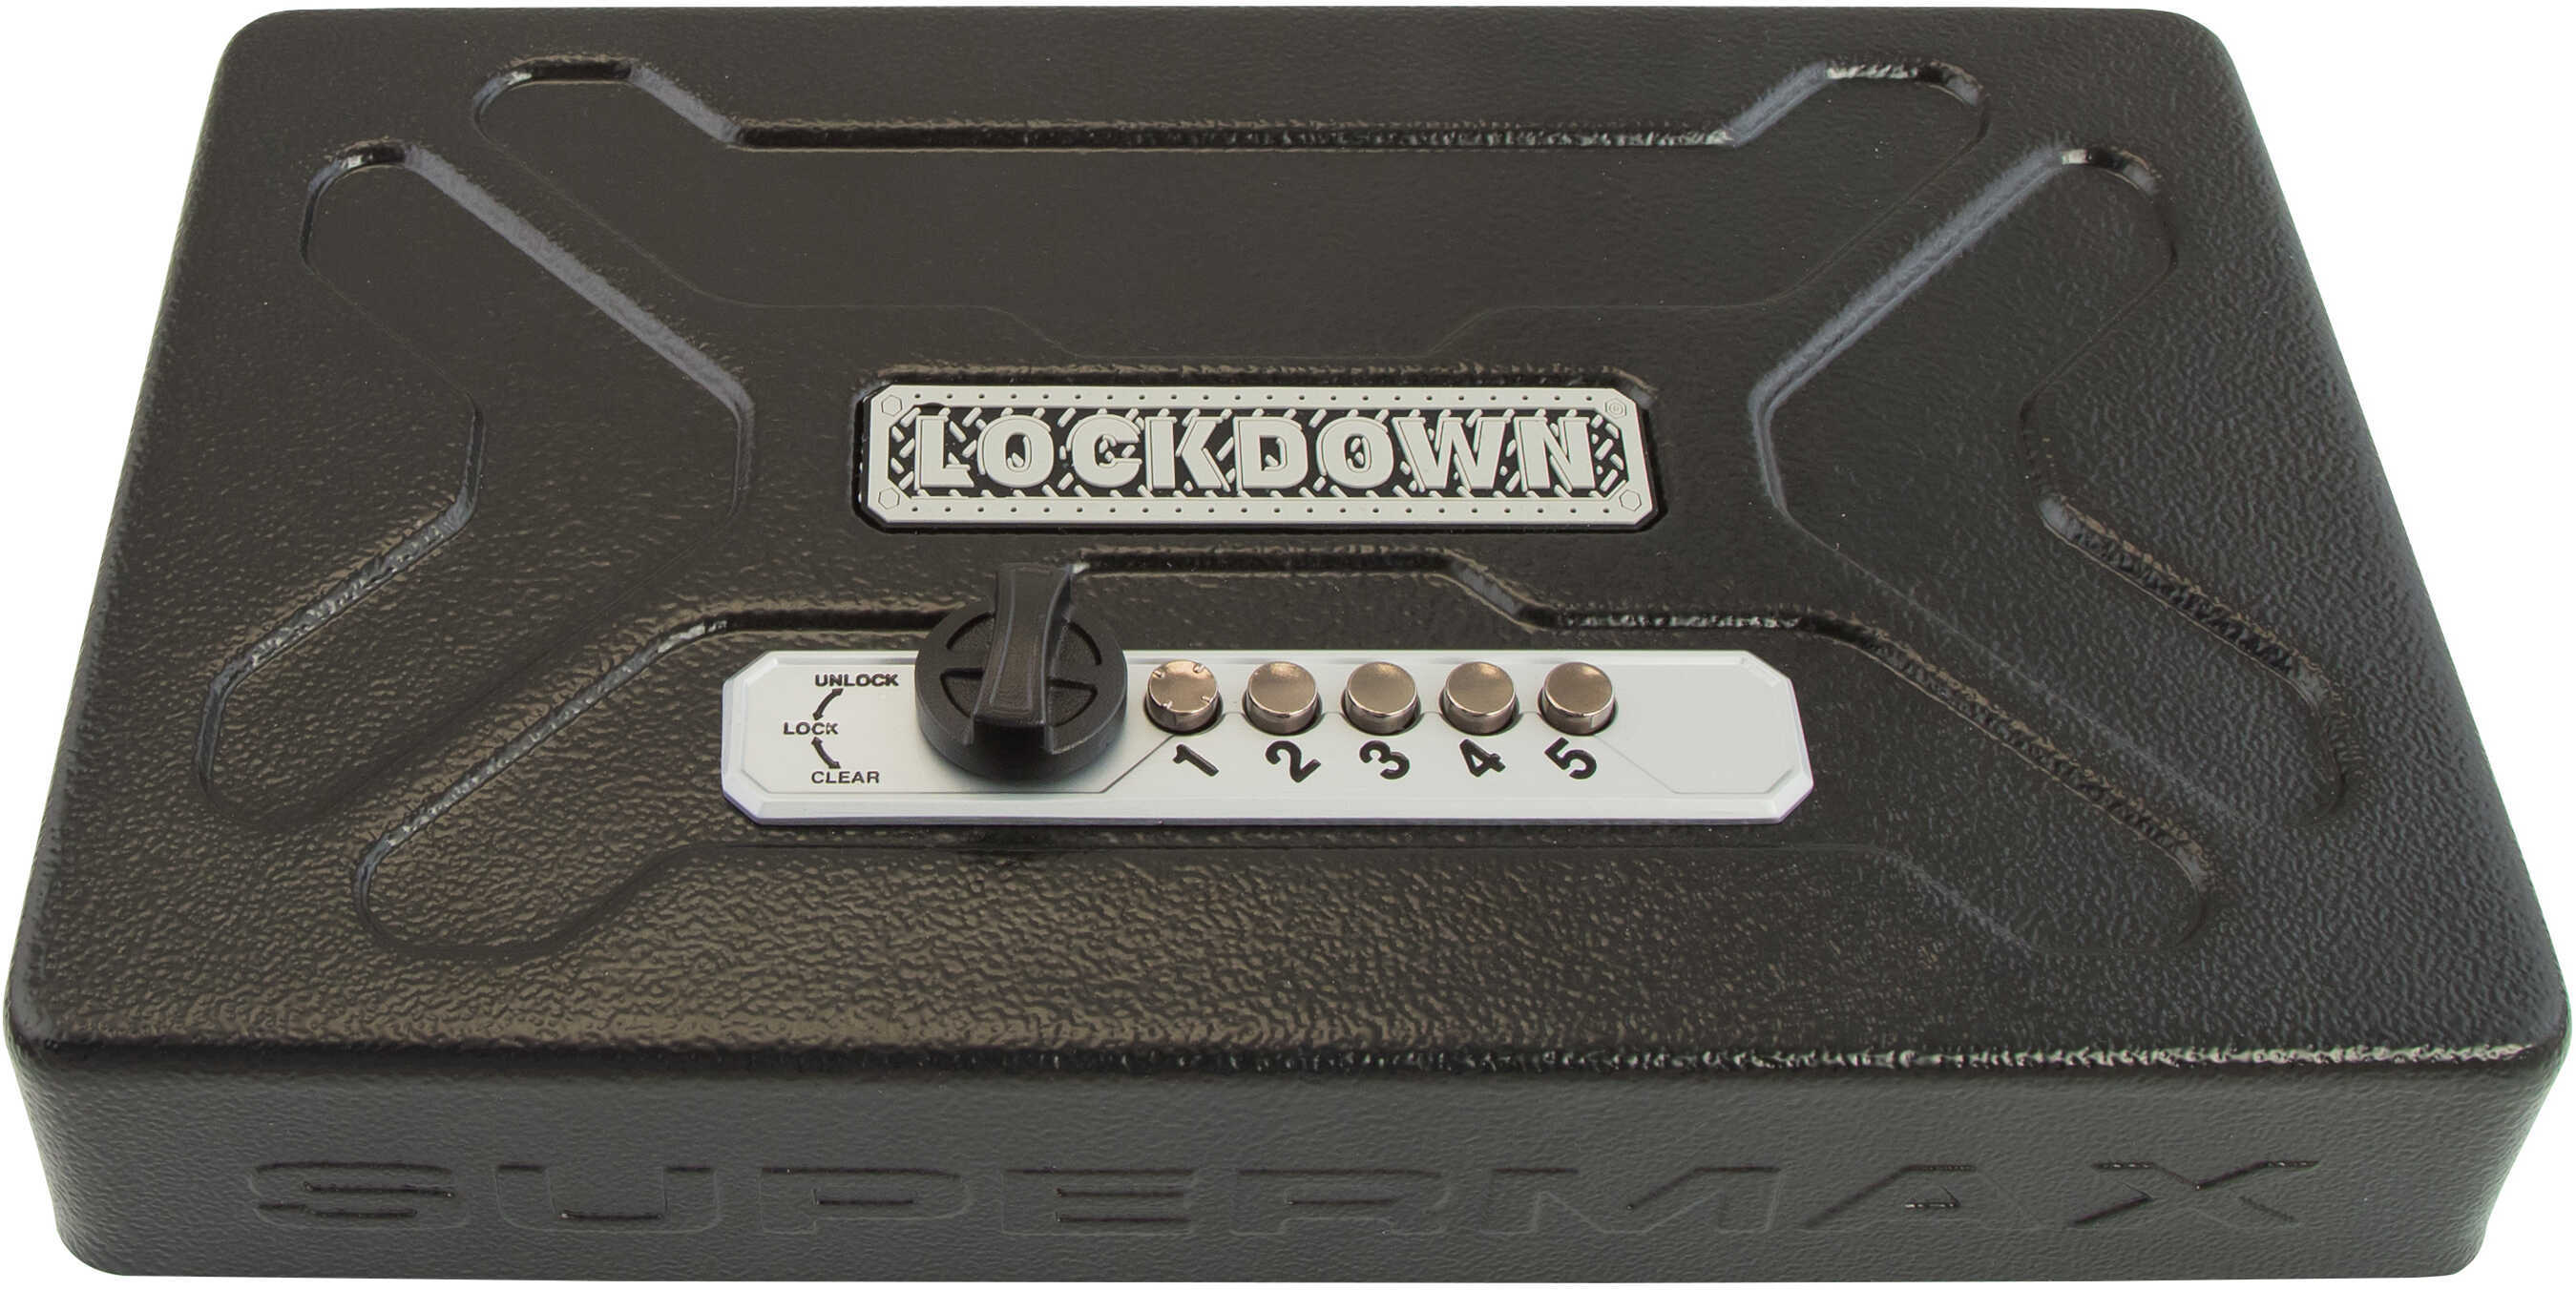 Lockdown SuperMax Universal Vault Mechanical Md: 222905